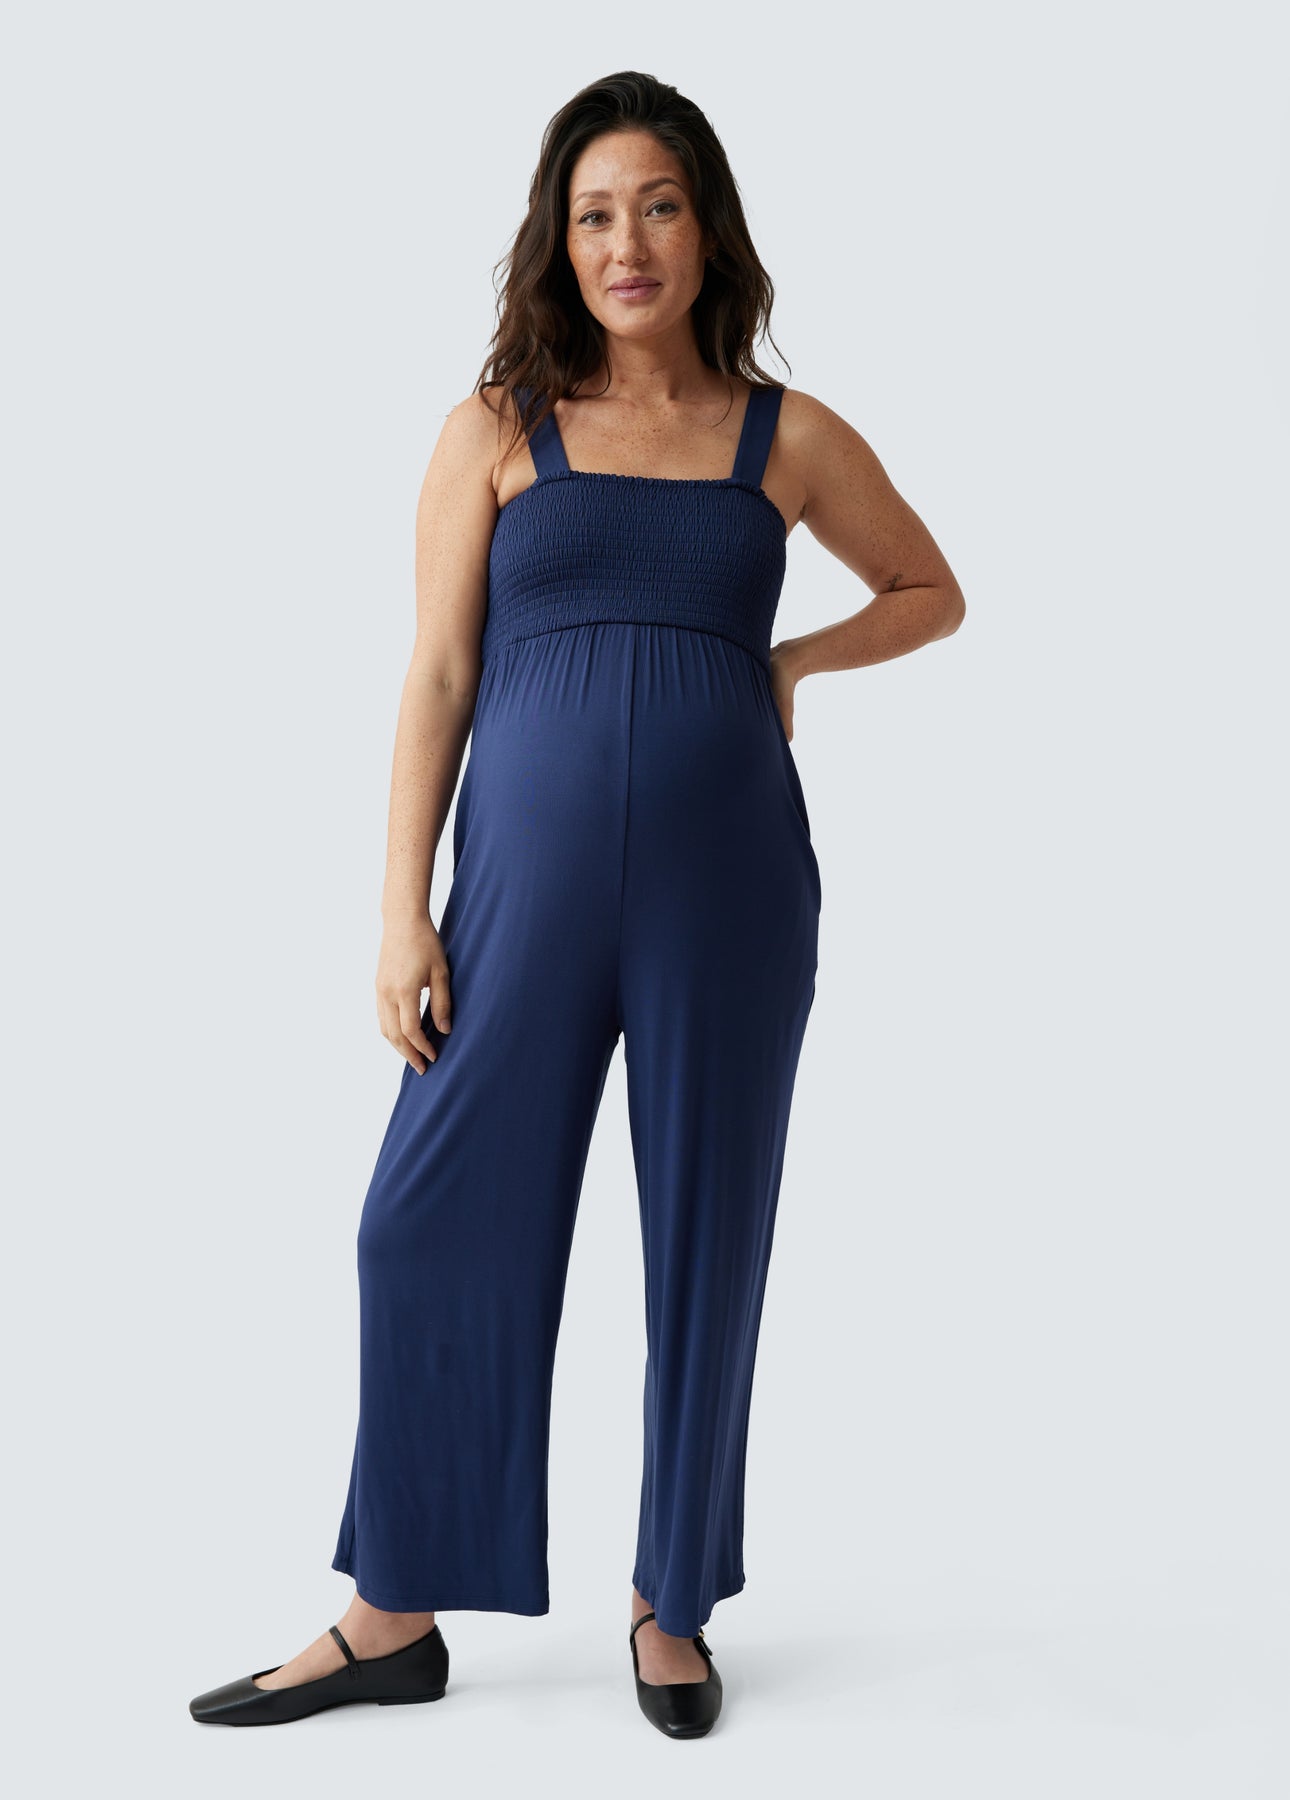 La Clef Sleeveless Smocking Top Maternity Jumpsuit - Walmart.com